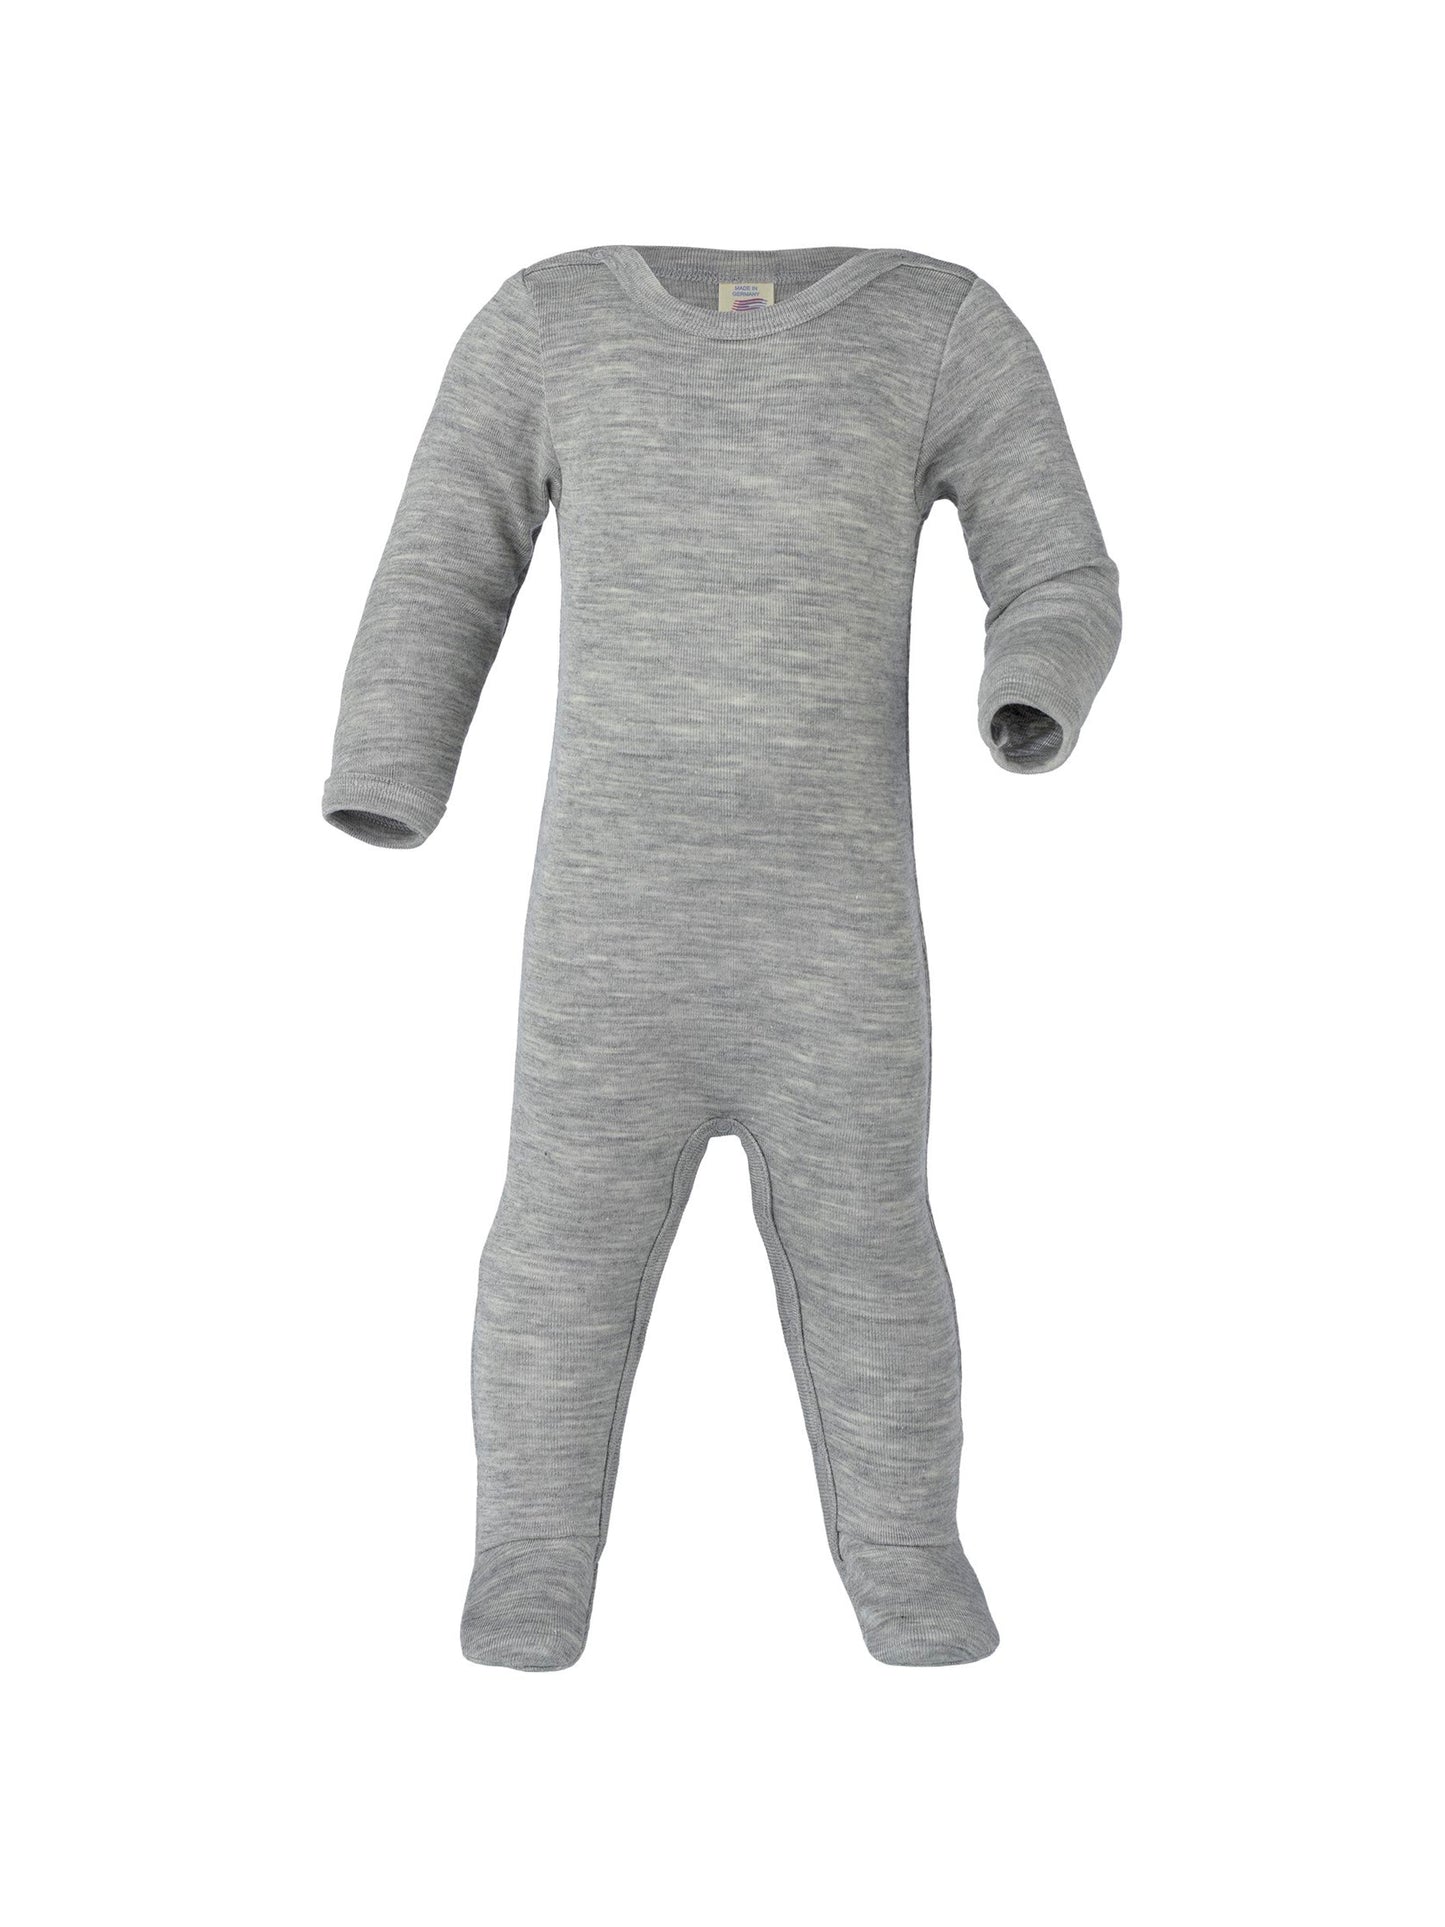 Engel - Wool/silk sleep overall - Grey melange